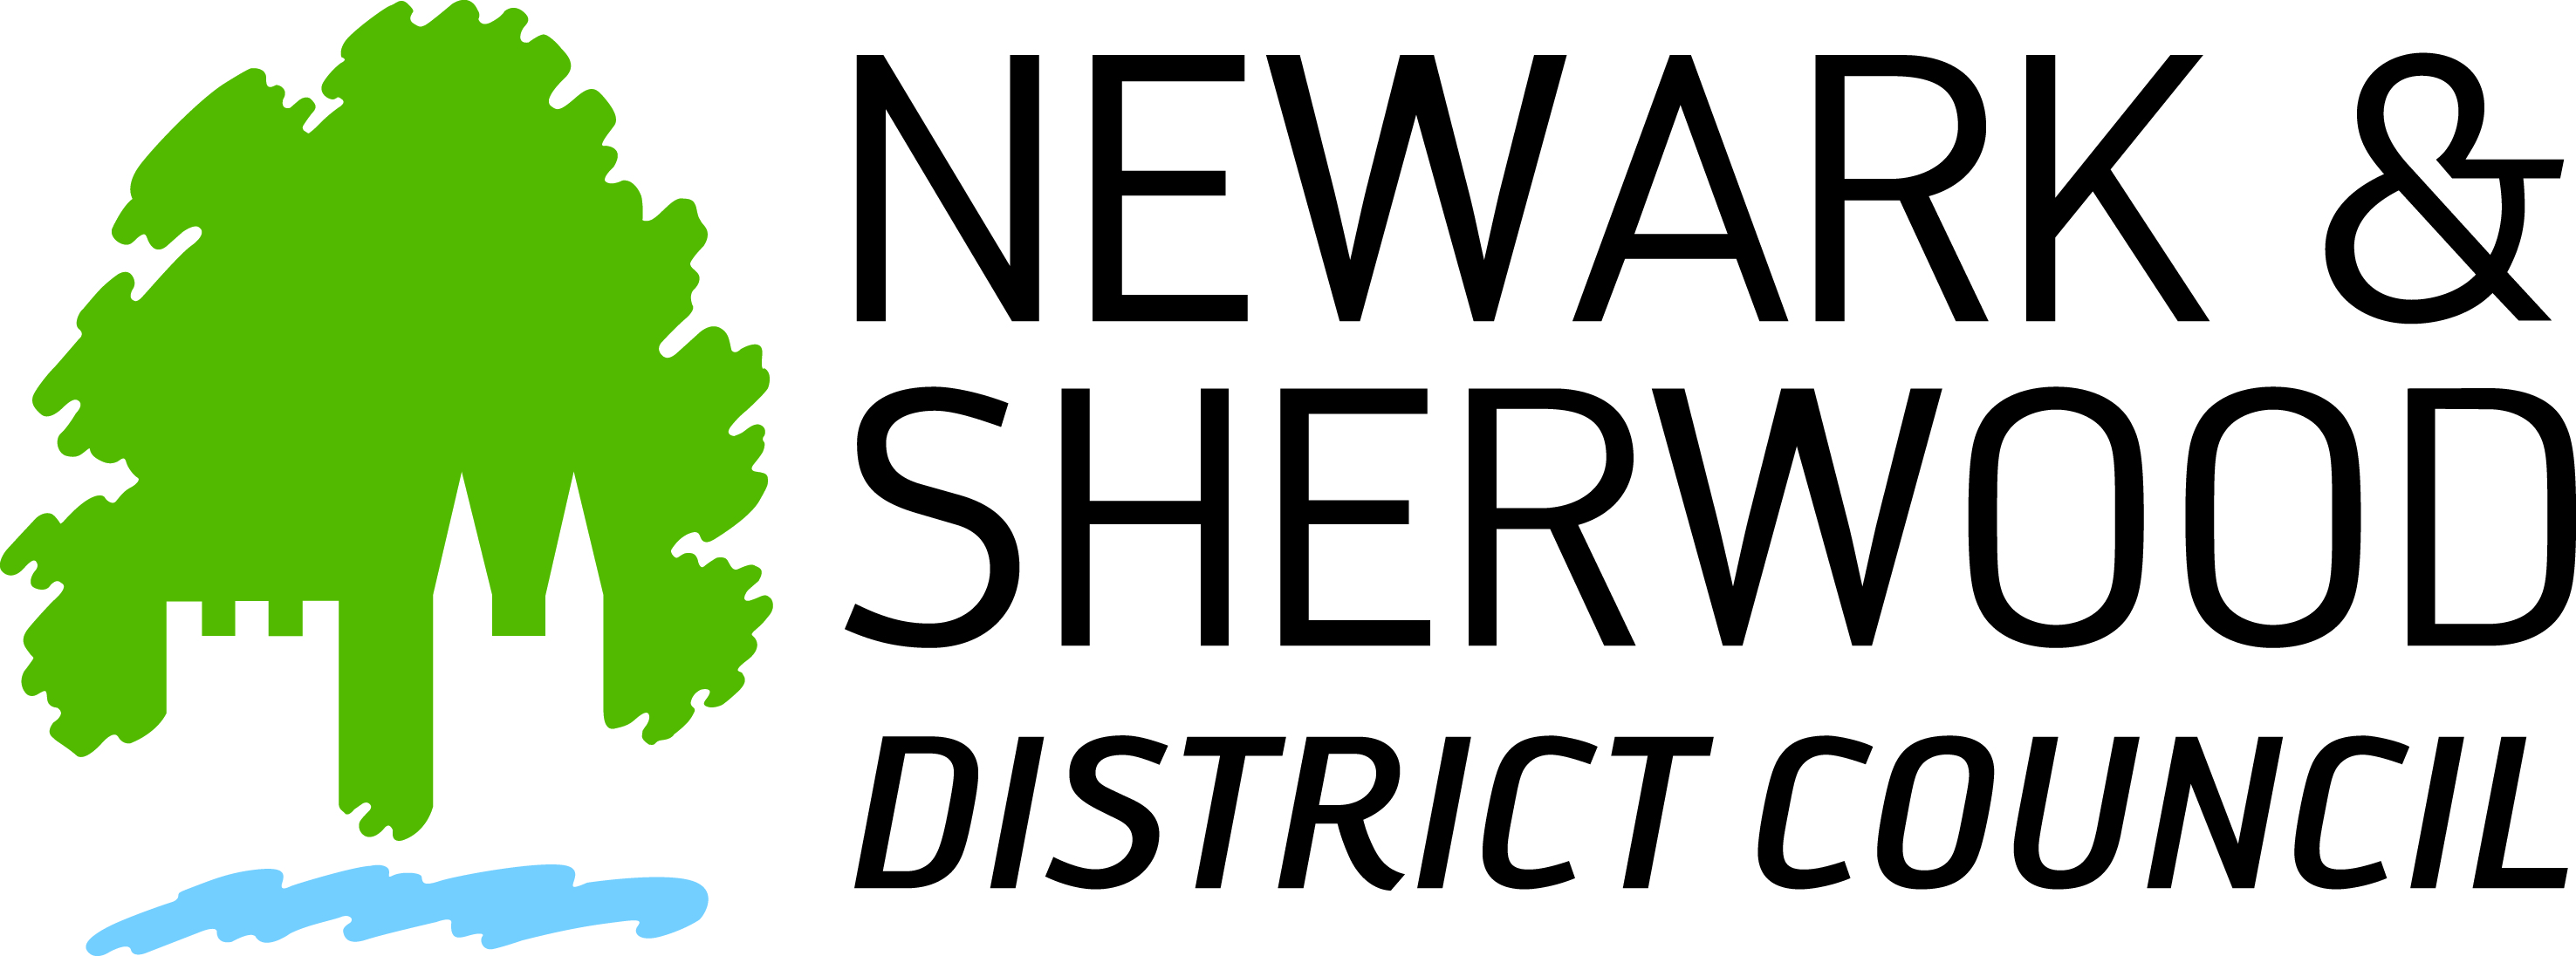 Newark and sherwood district council logo